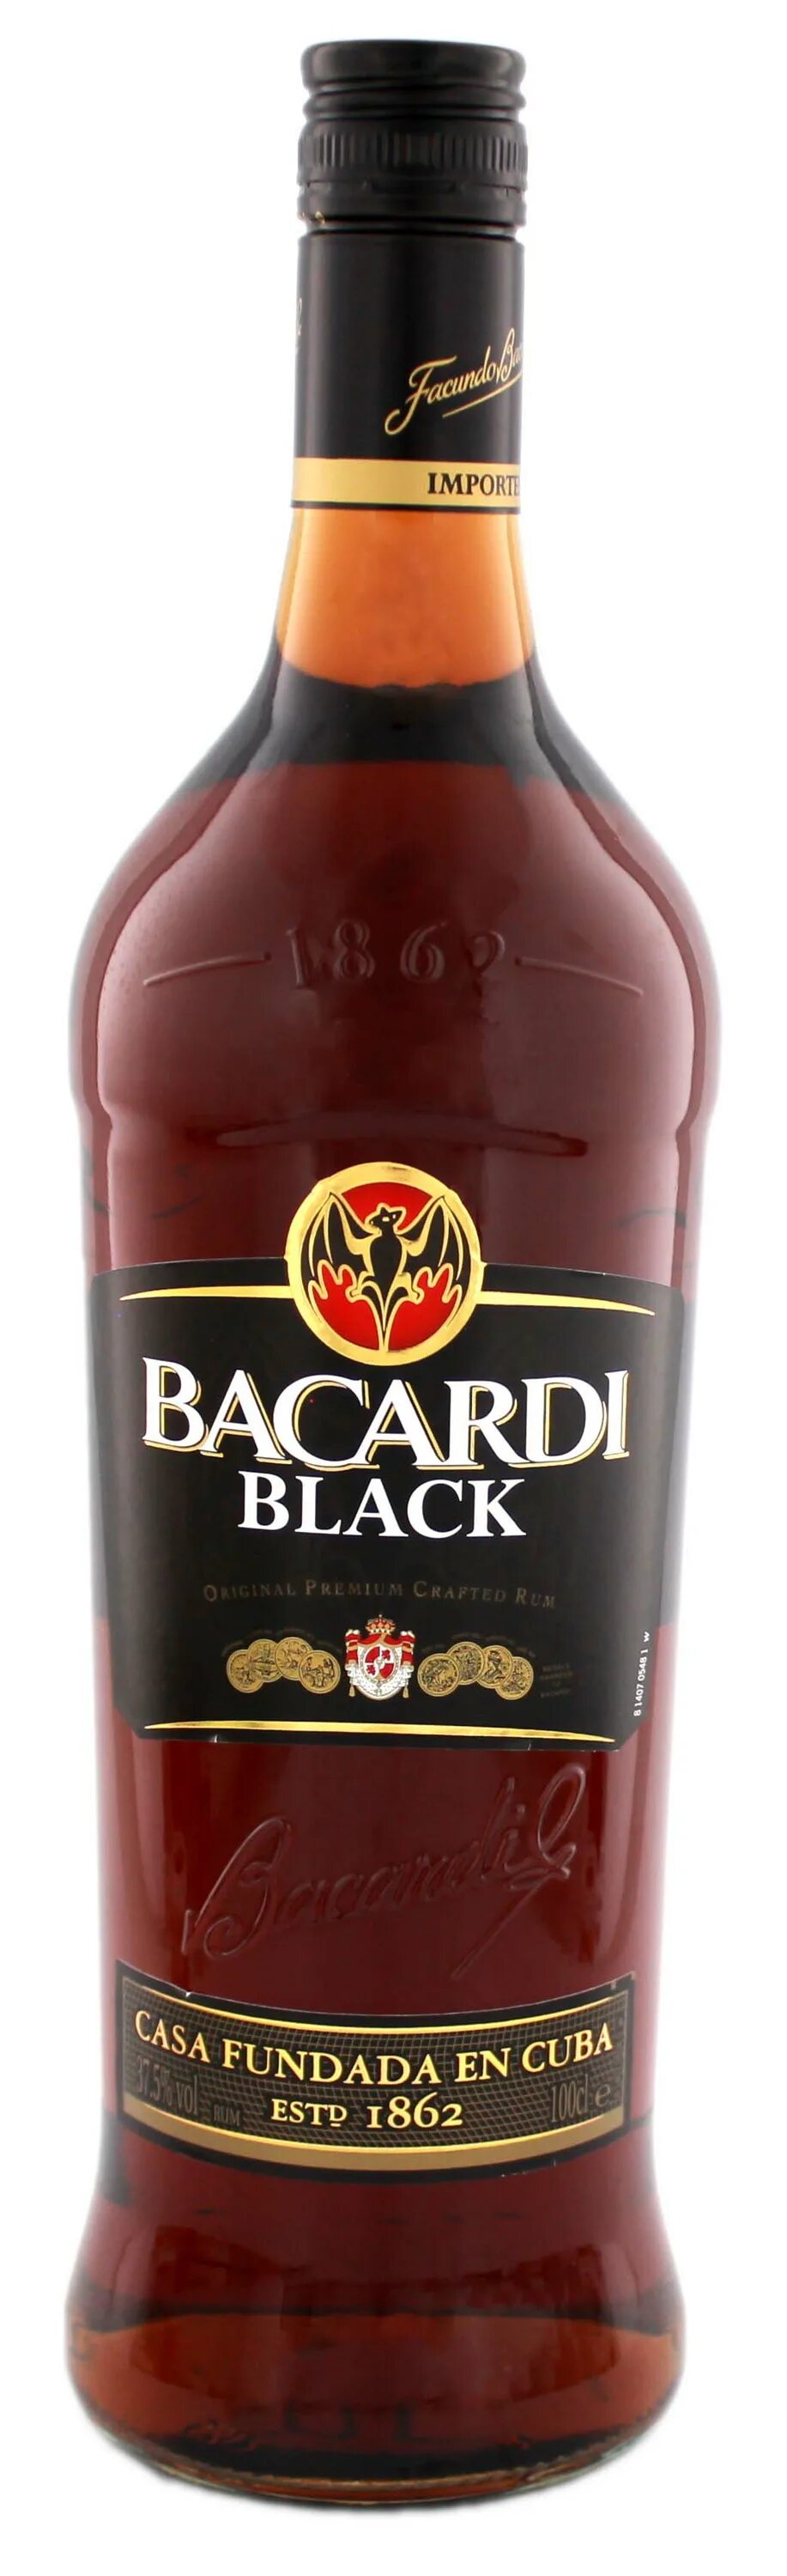 Бакарди Блэк 1 литр. Бакарди Блэк 1 литр оригинал. Бакарди Блэк Original Premium Crafted rum. Бакарди темный Ром 1 литр. Бакарди ром 1 литр